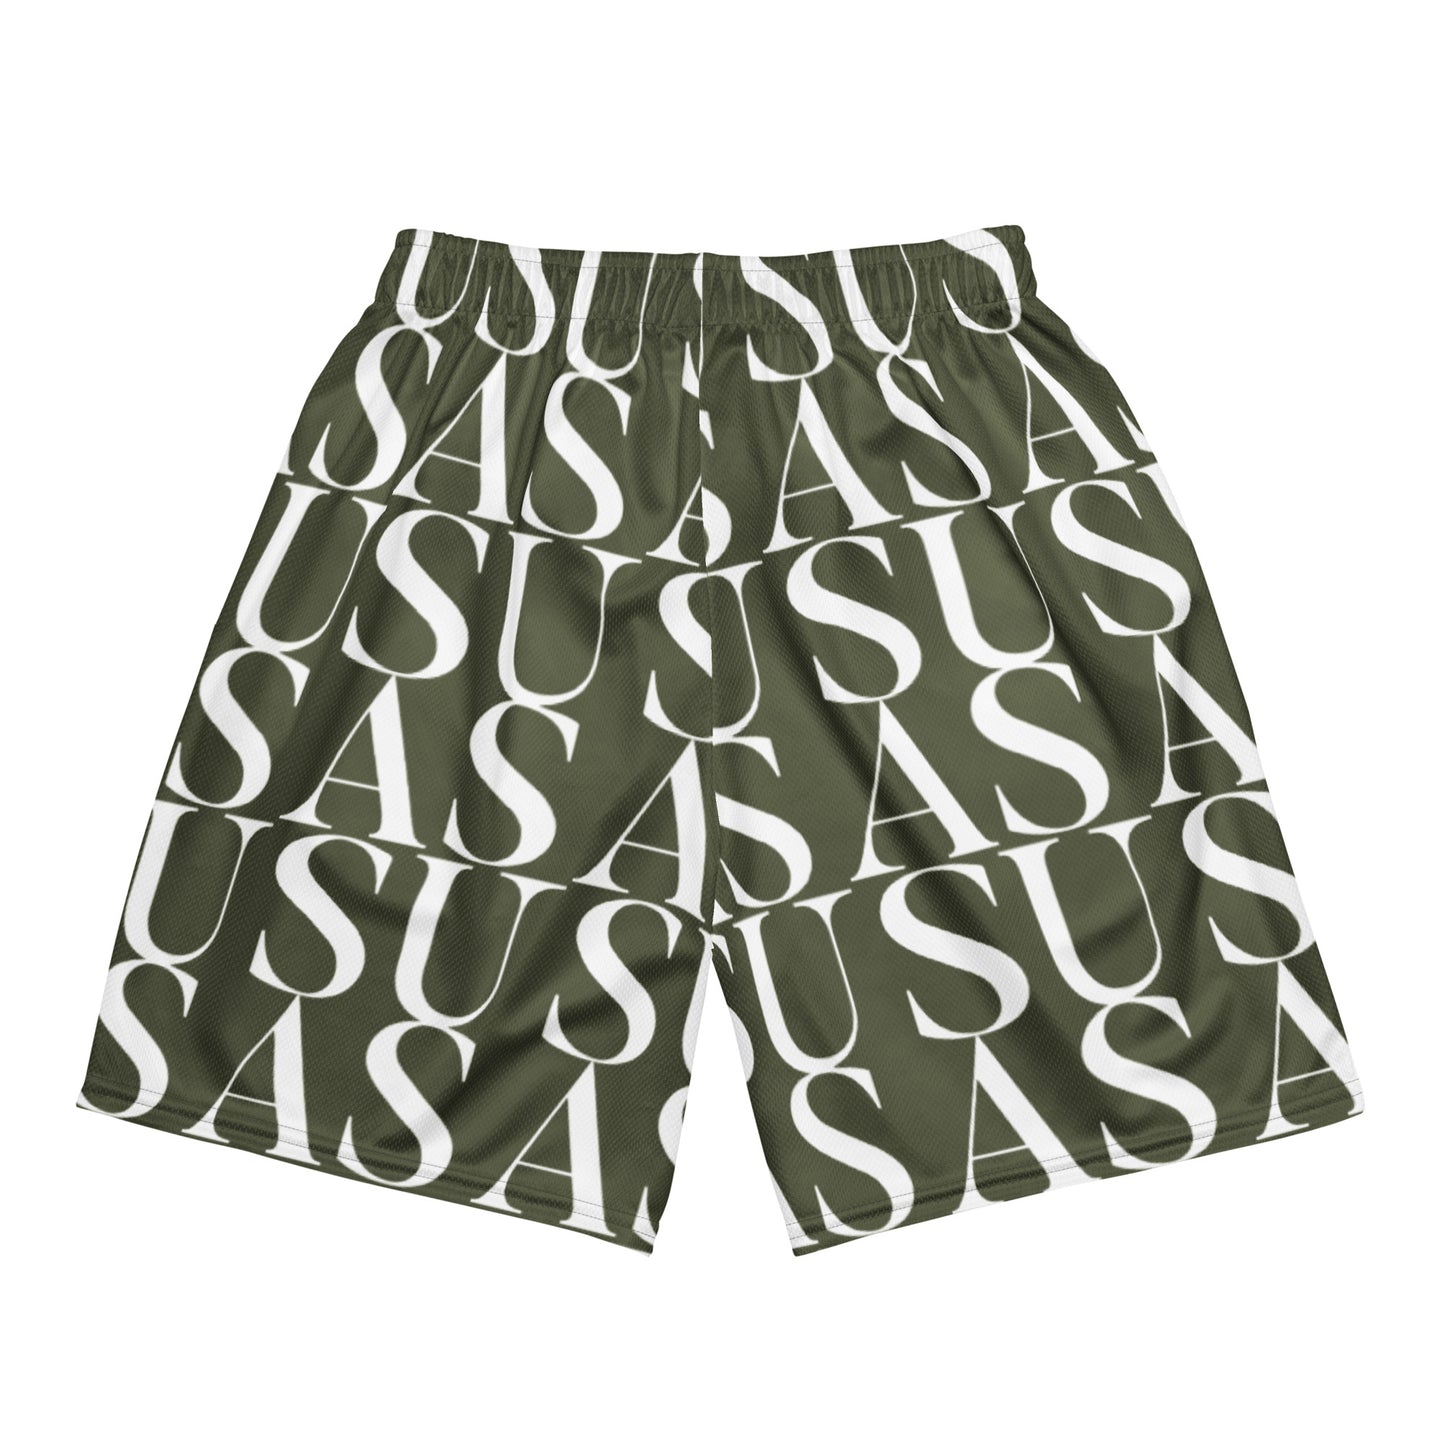 Olive SUAS Mesh Shorts